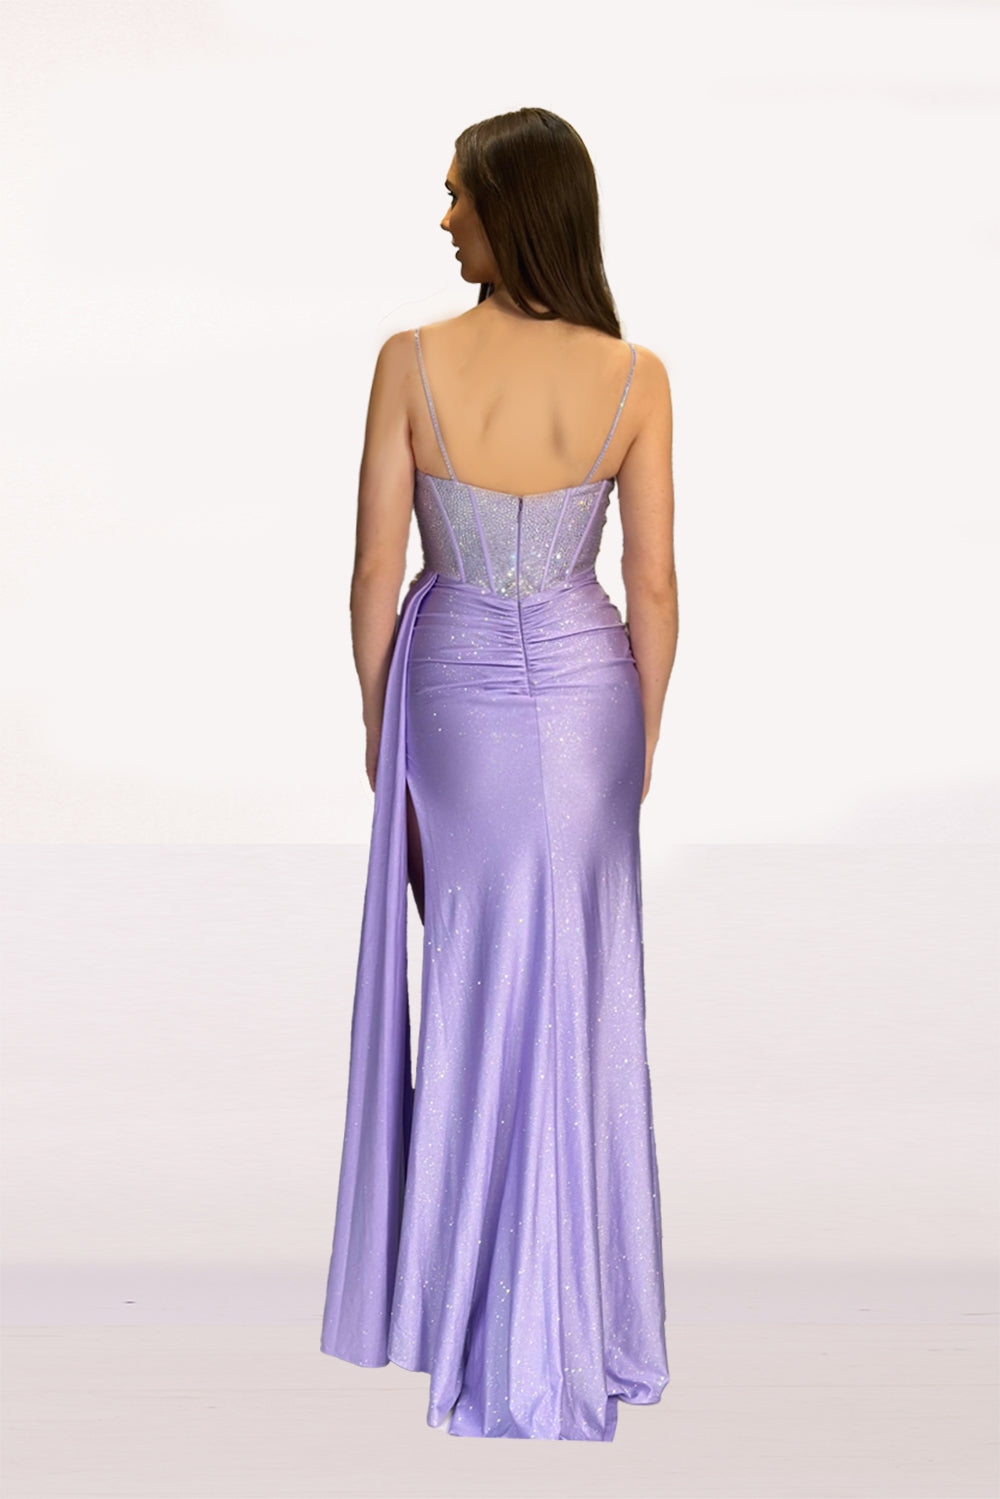 Lucci-Lu-1298-Straight-Neckline-Zipper-Back-High-Slit-Glitter-Tulle-Fit-N-Flare-Lilac-Evening-Dress-B-Chic-Fashions-Prom-Dress